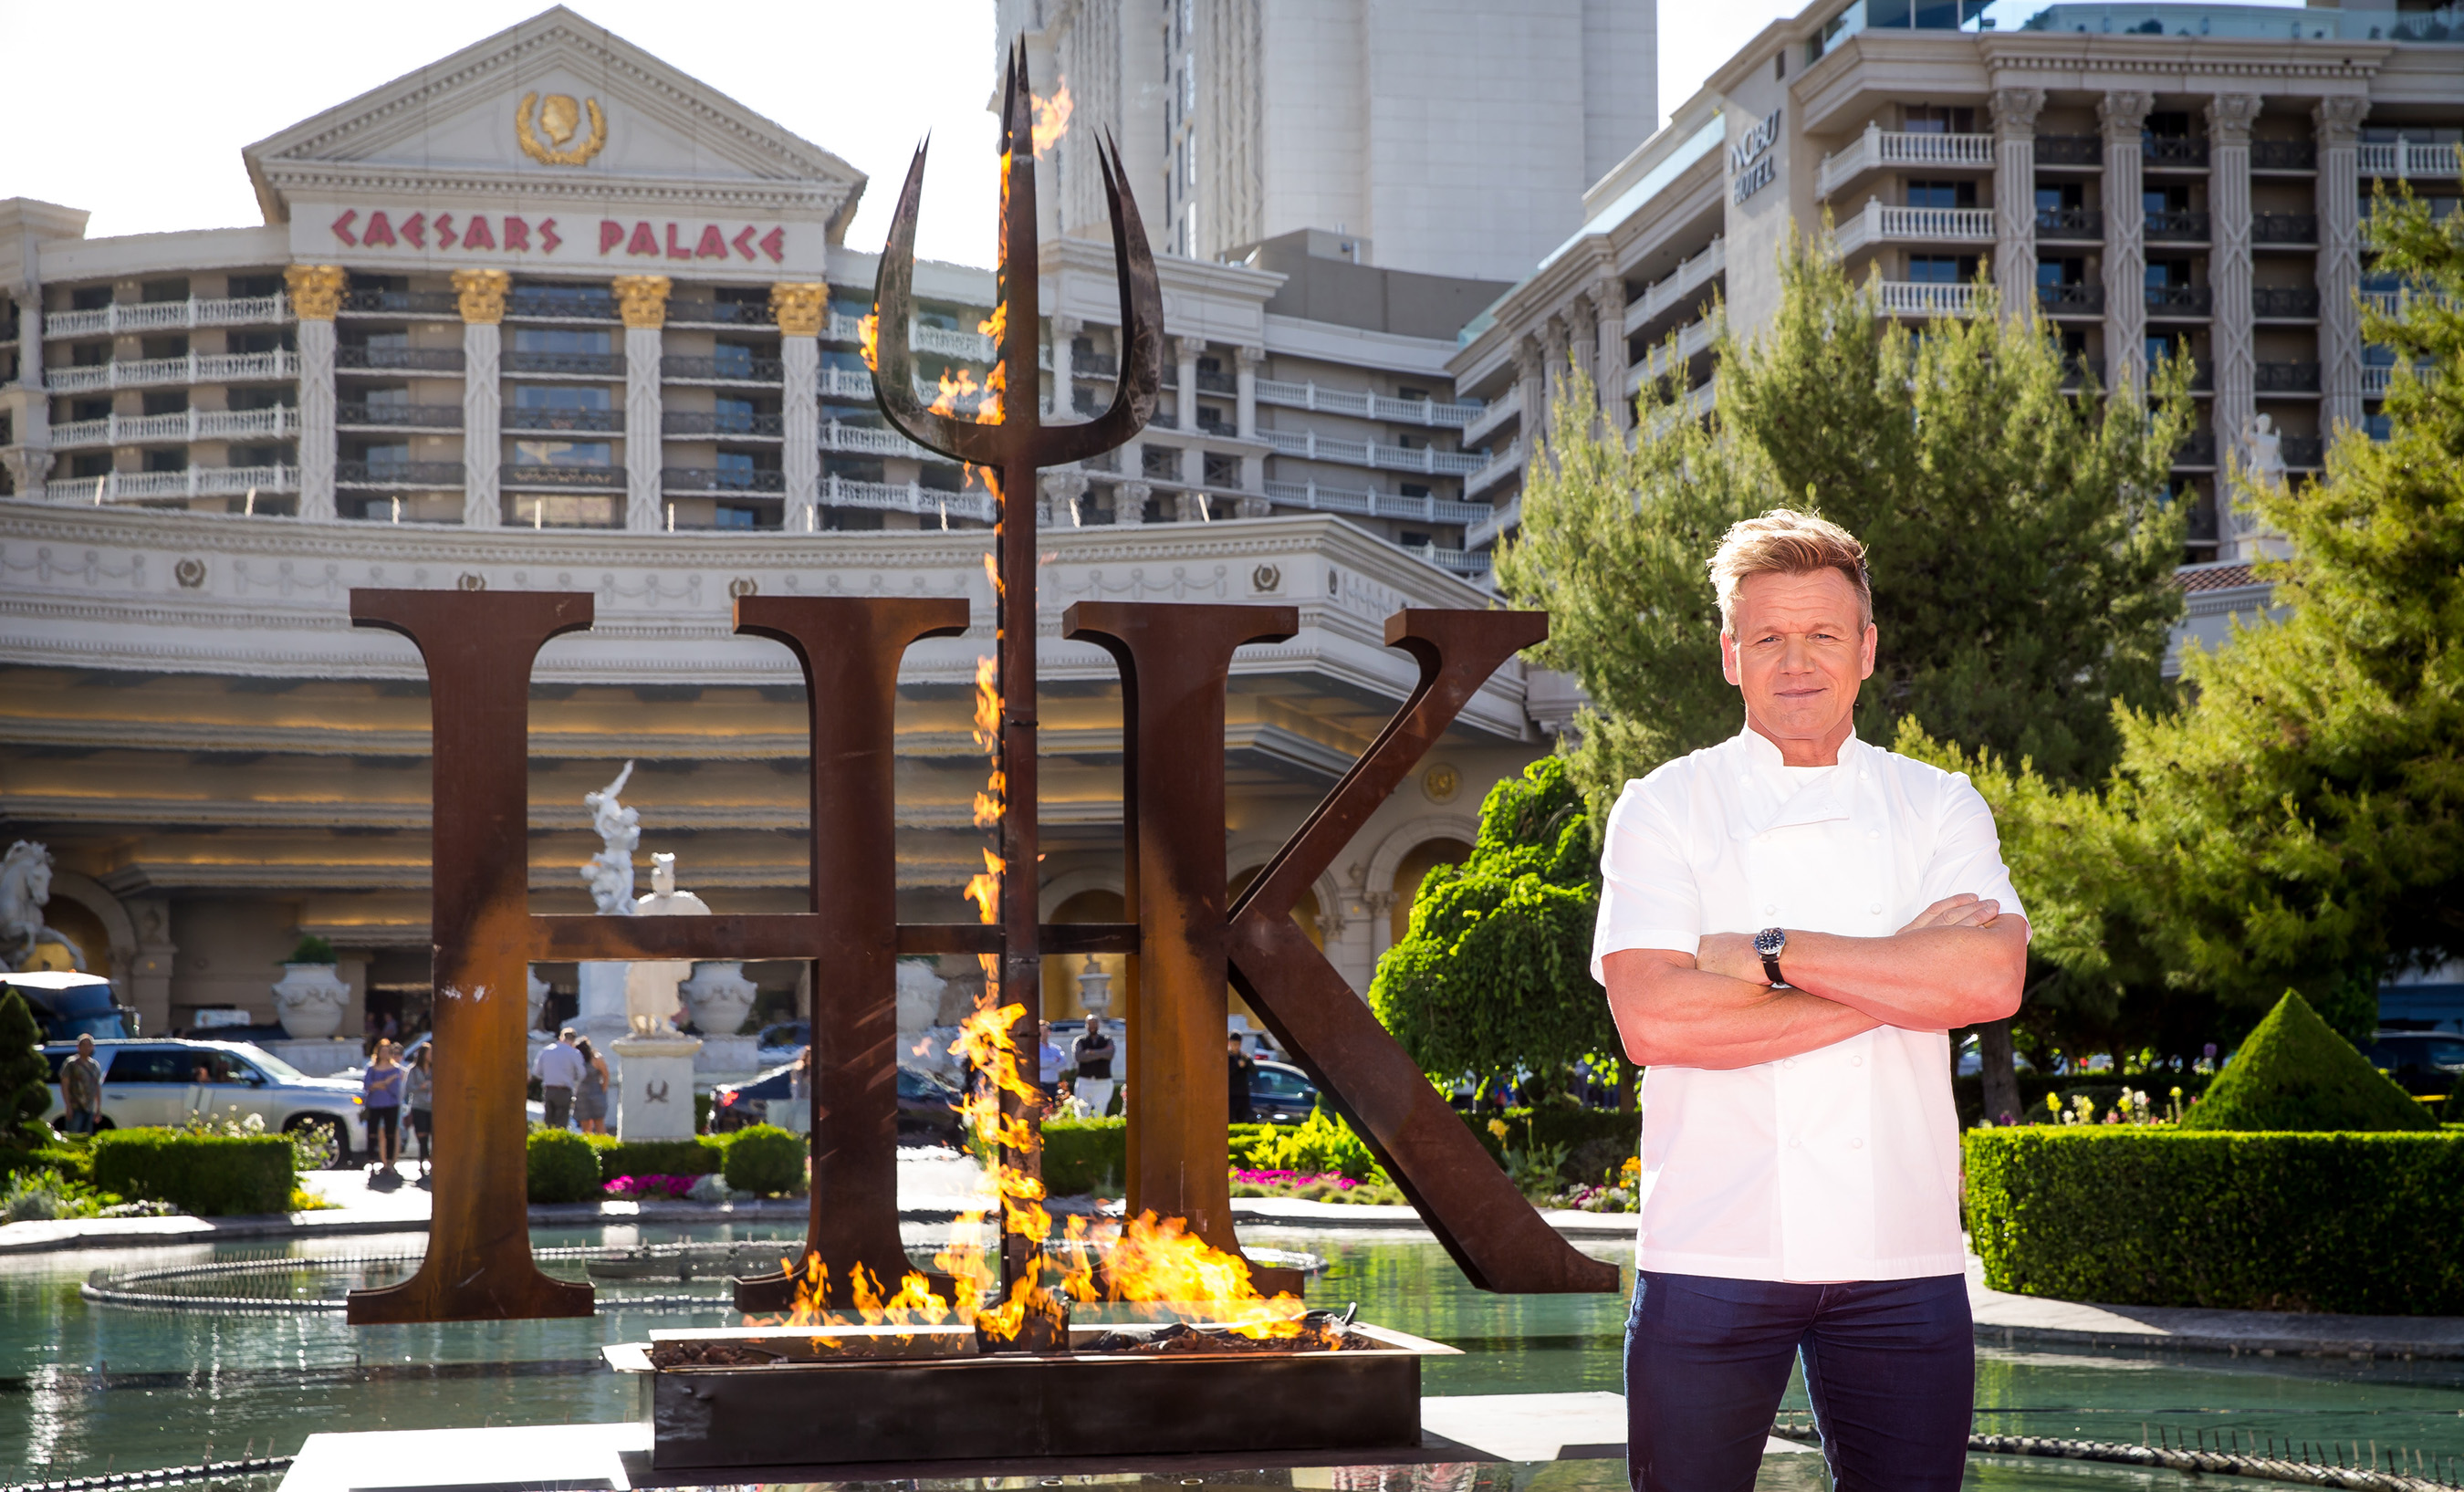 Chef Gordon Ramsay announces the world's first Hell's Kitchen restaurant at Caesars Palace Las Vegas. Photo credit Erik Kabik